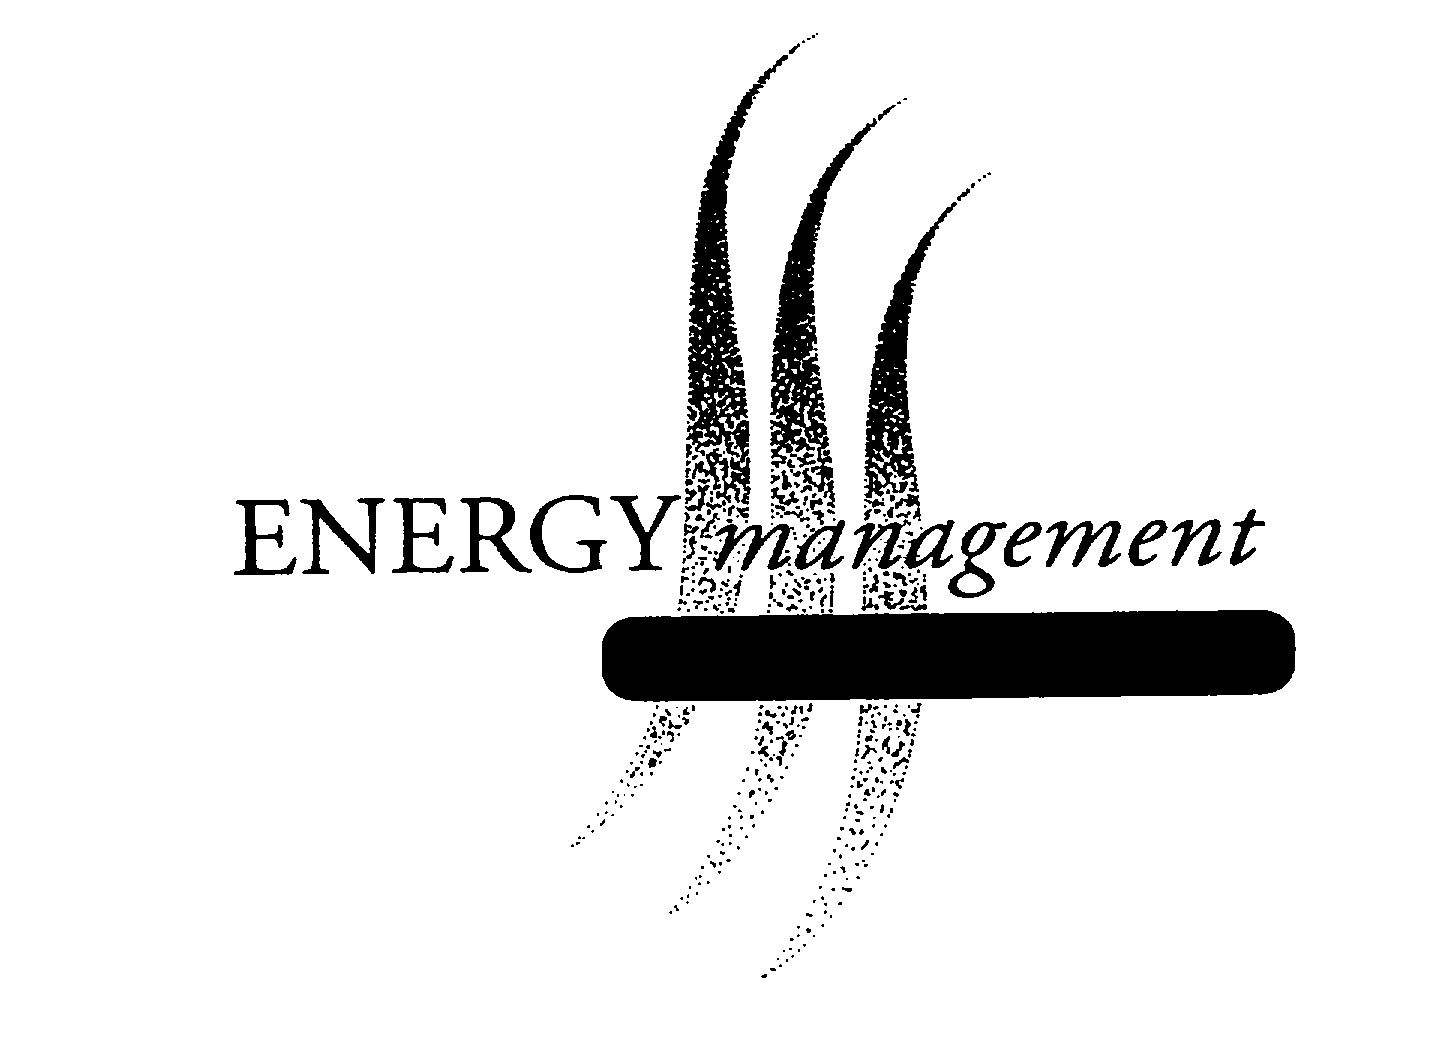 ENERGY MANAGEMENT